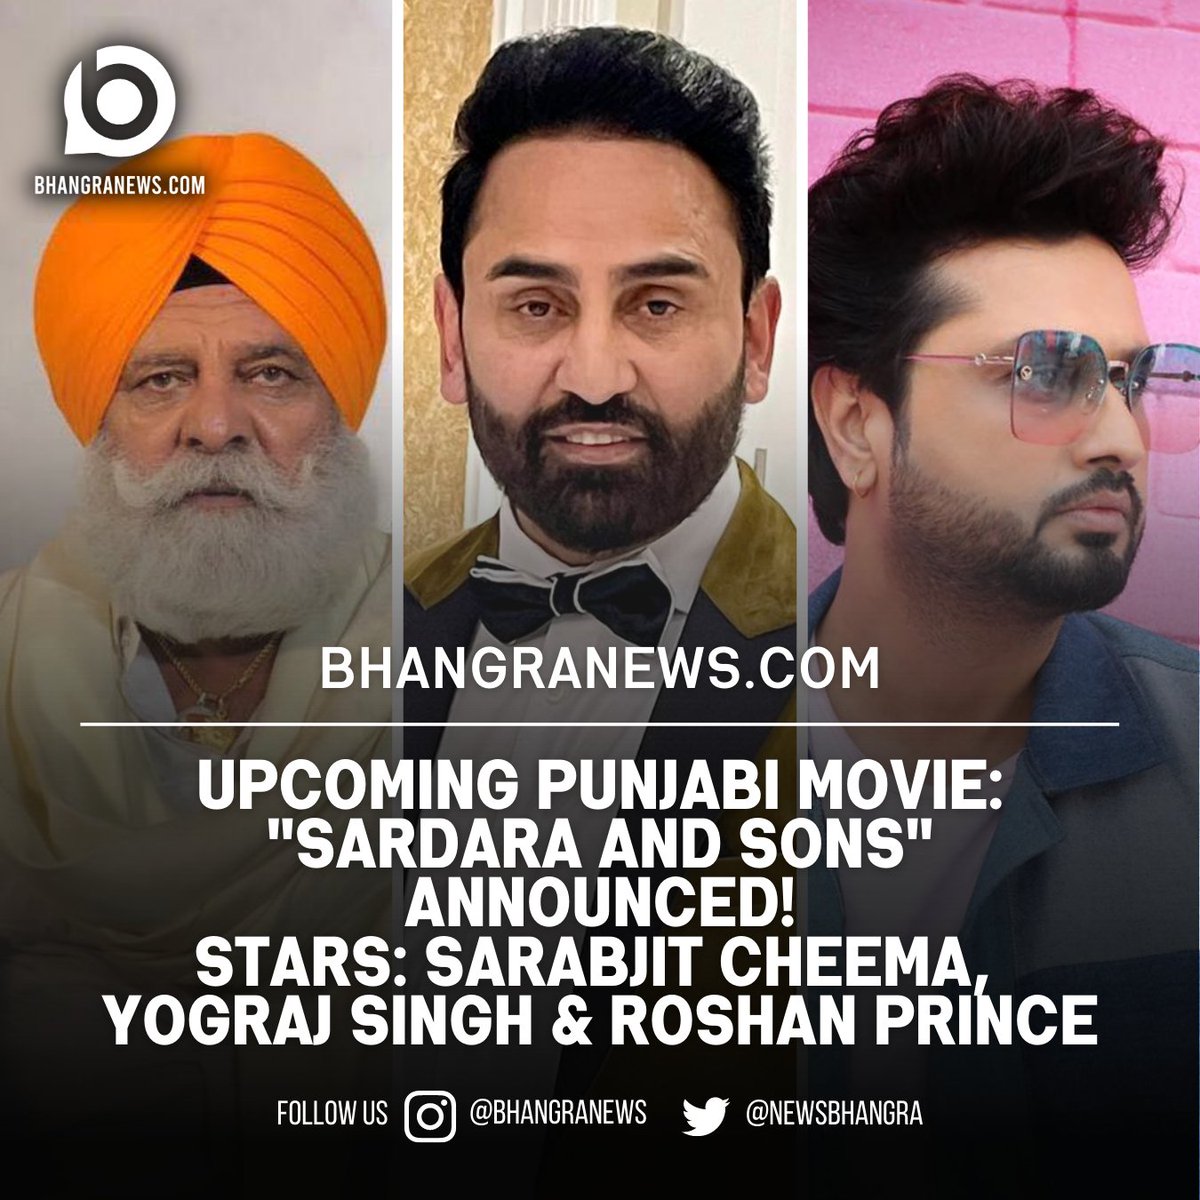 The upcoming Punjabi movie titled 'Sardara and Sons' announced! @SarbjitCheema @yograjofficial @TheRoshanPrince @iampankajBatra 

bhangranews.com/punjabi-singer…

#bhangranews #sardarandsons #punjabimovie #sarabjitcheema #roshanprince #yograjsingh #pankajbatra #nuclearproductions